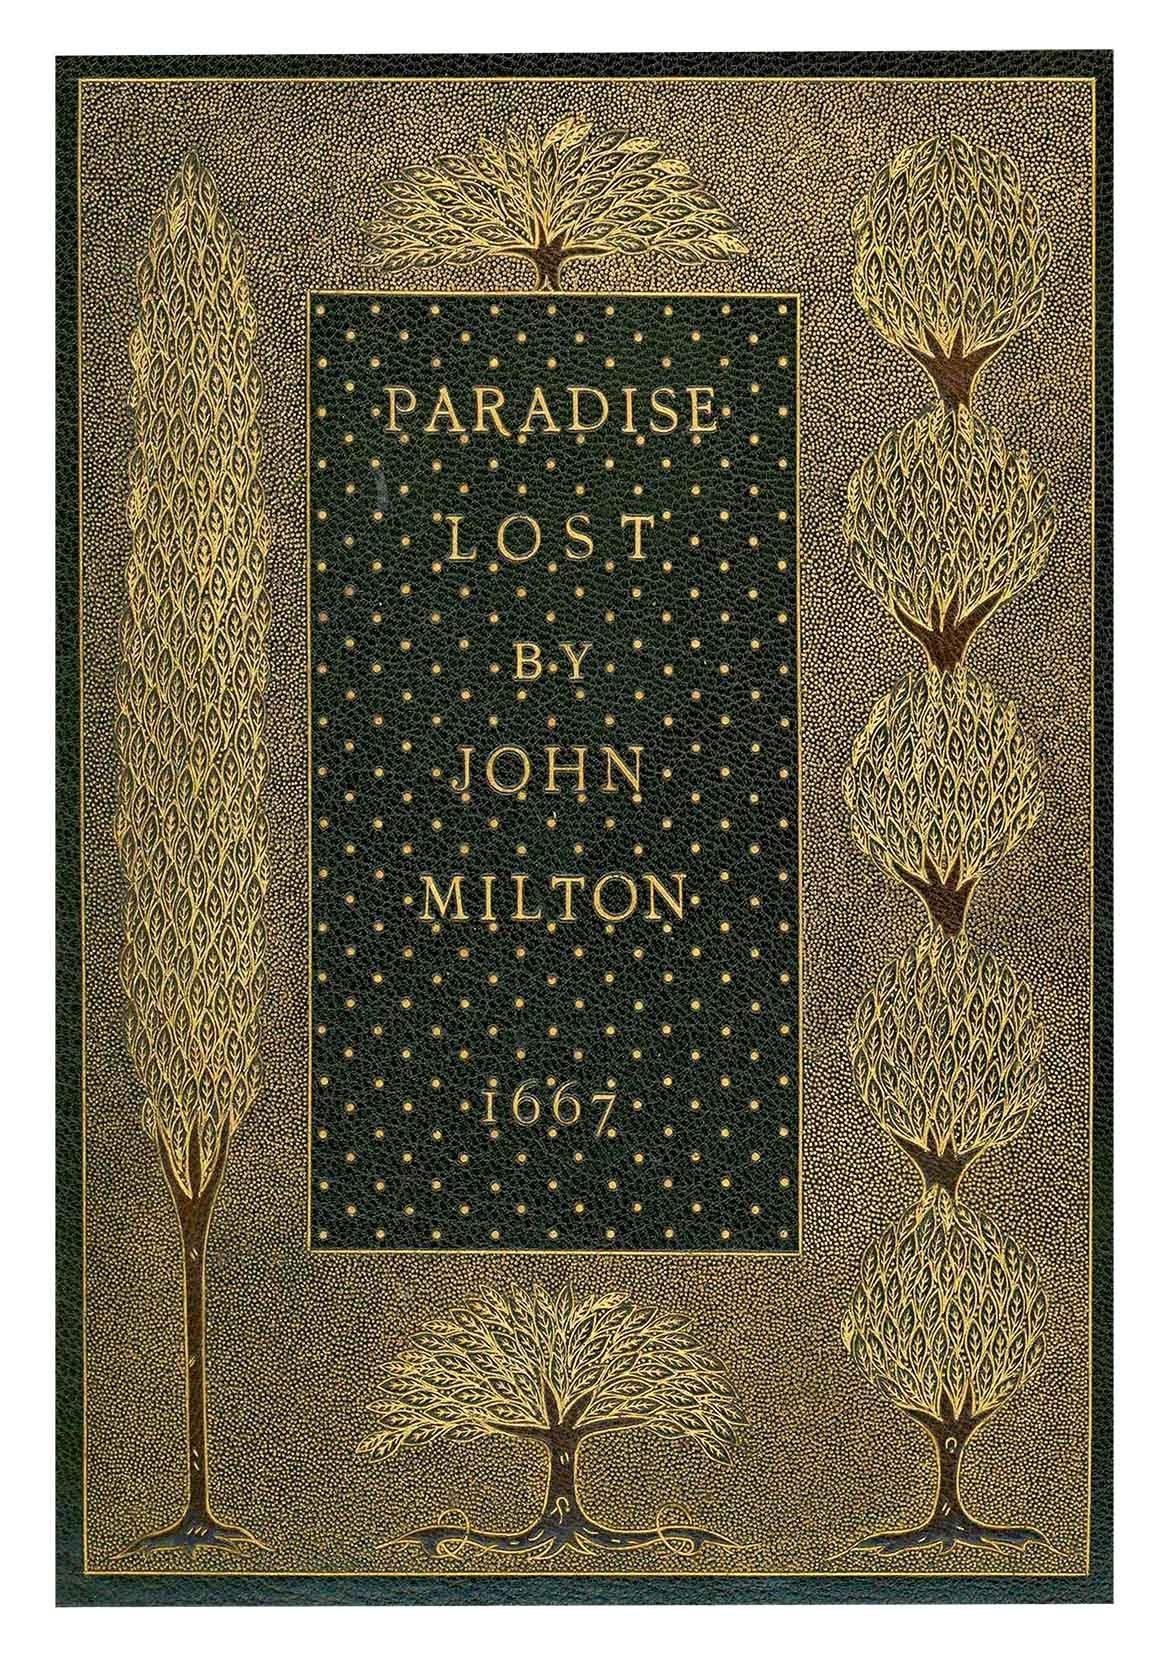 PARADISE LOST PRINT: Vintage Milton Book Cover Art Poster - Pimlico Prints